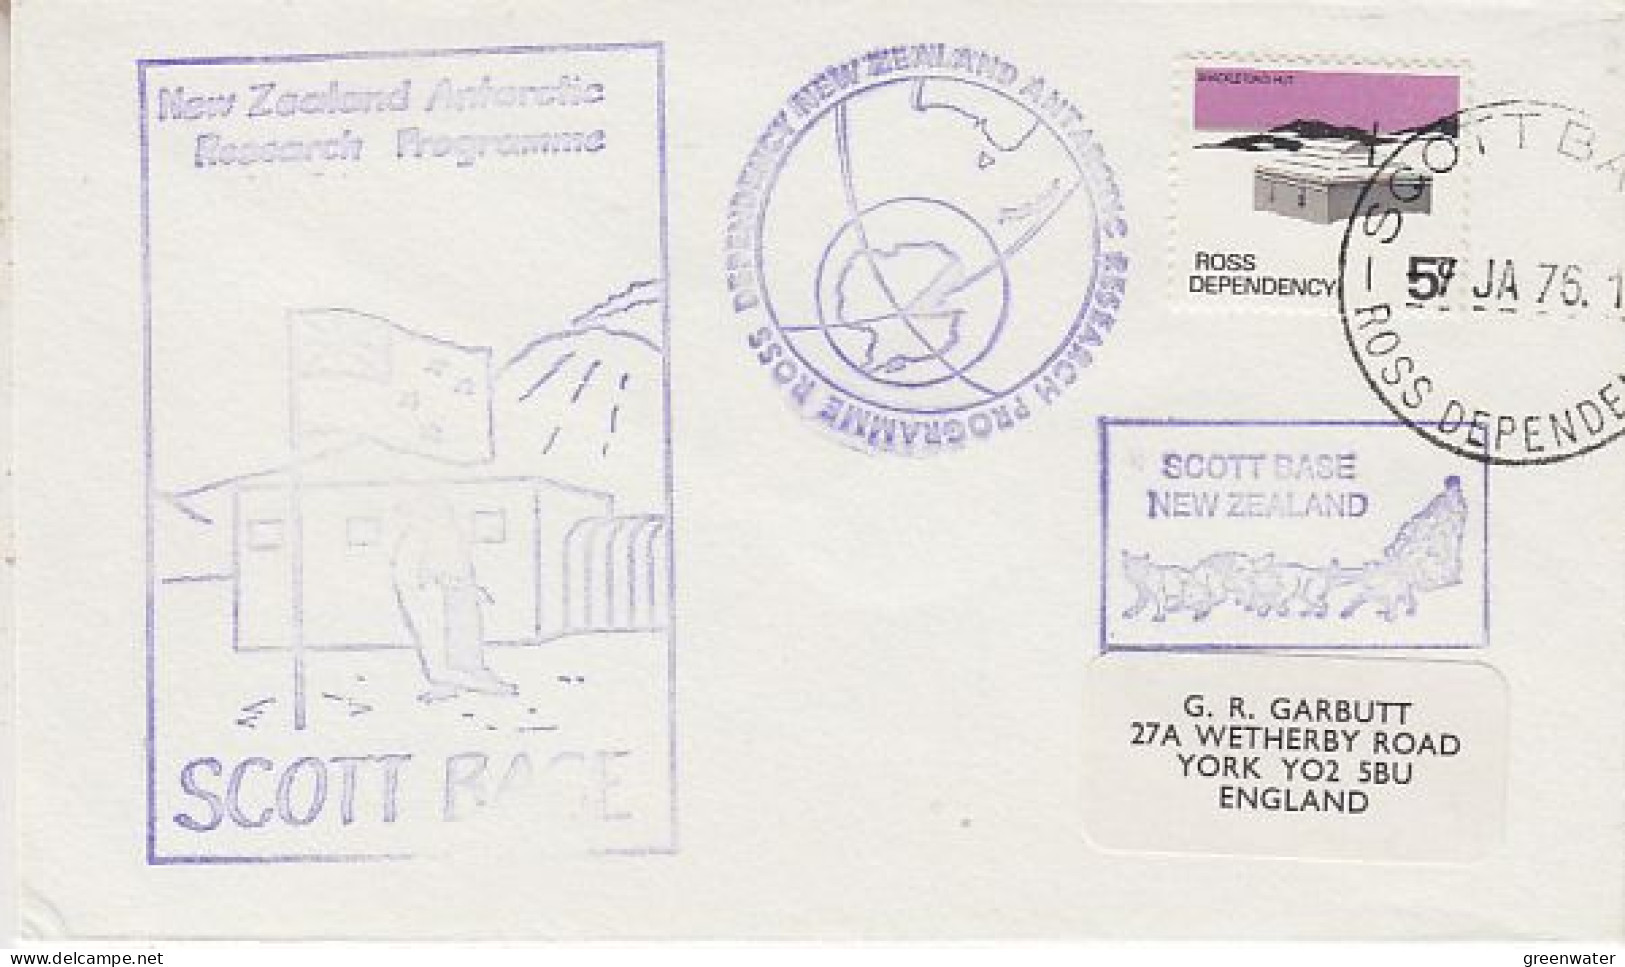 Ross Dependency NZARP Ca Scott Base 7 JA 1976 (RO204) - Covers & Documents